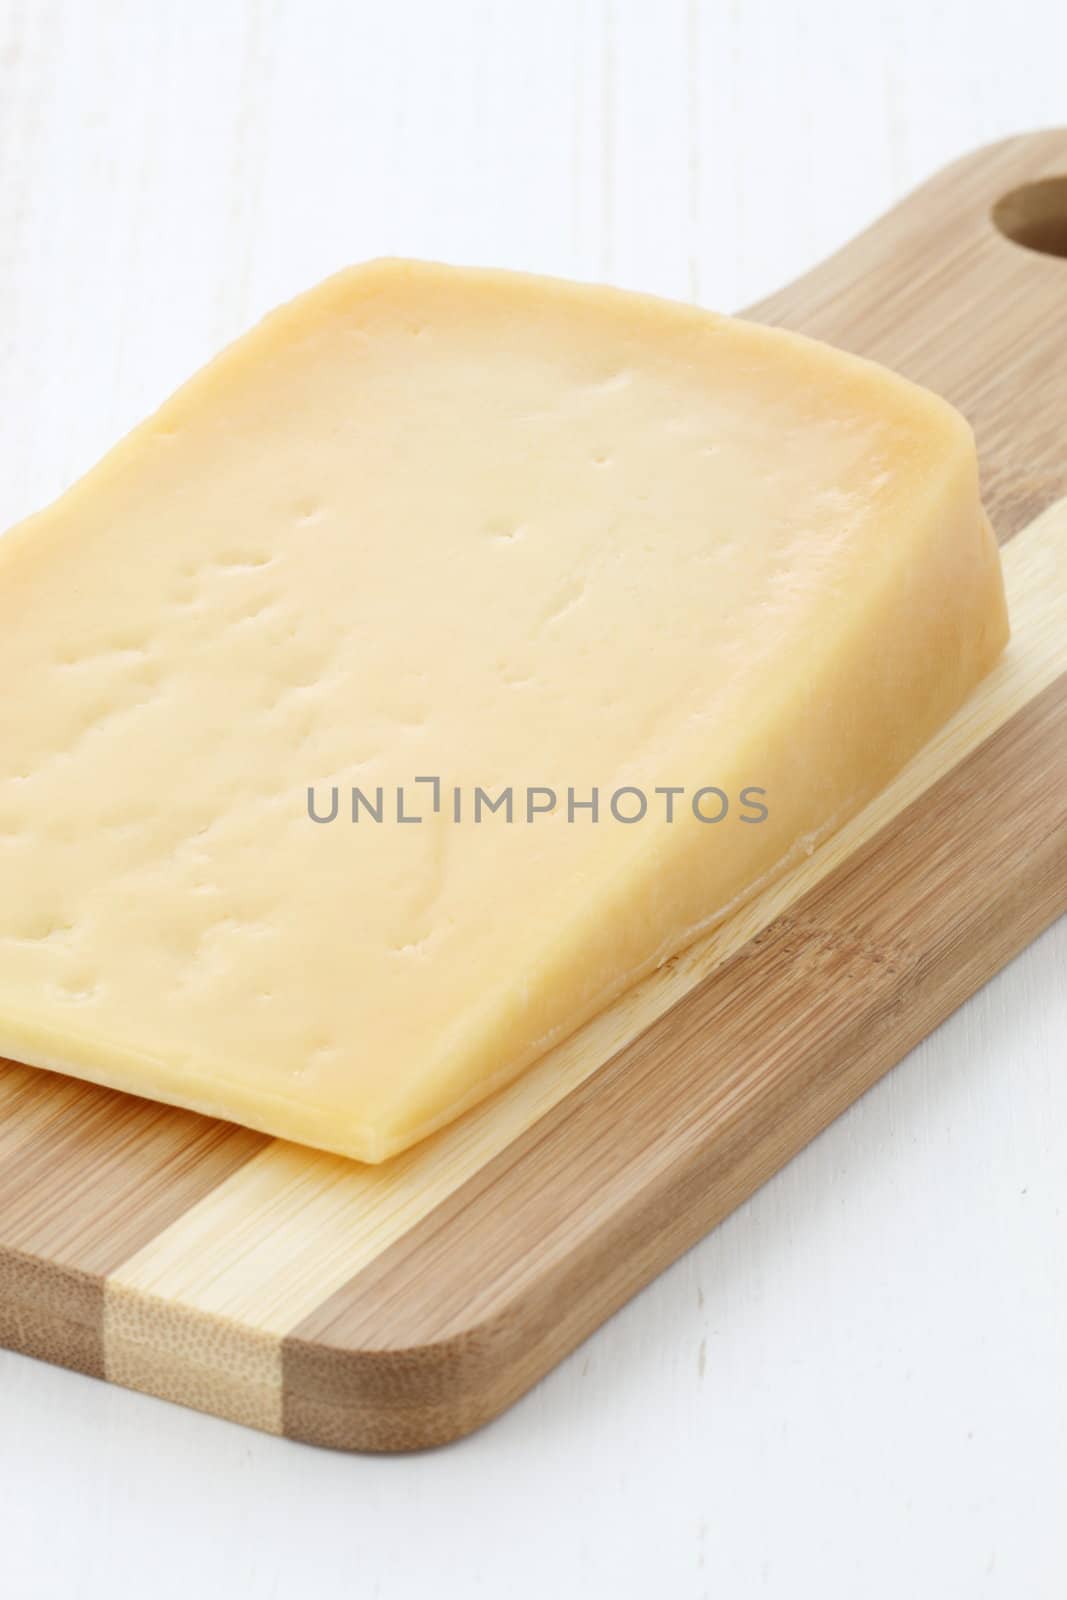 Gourmet aged cheddar cheese by tacar